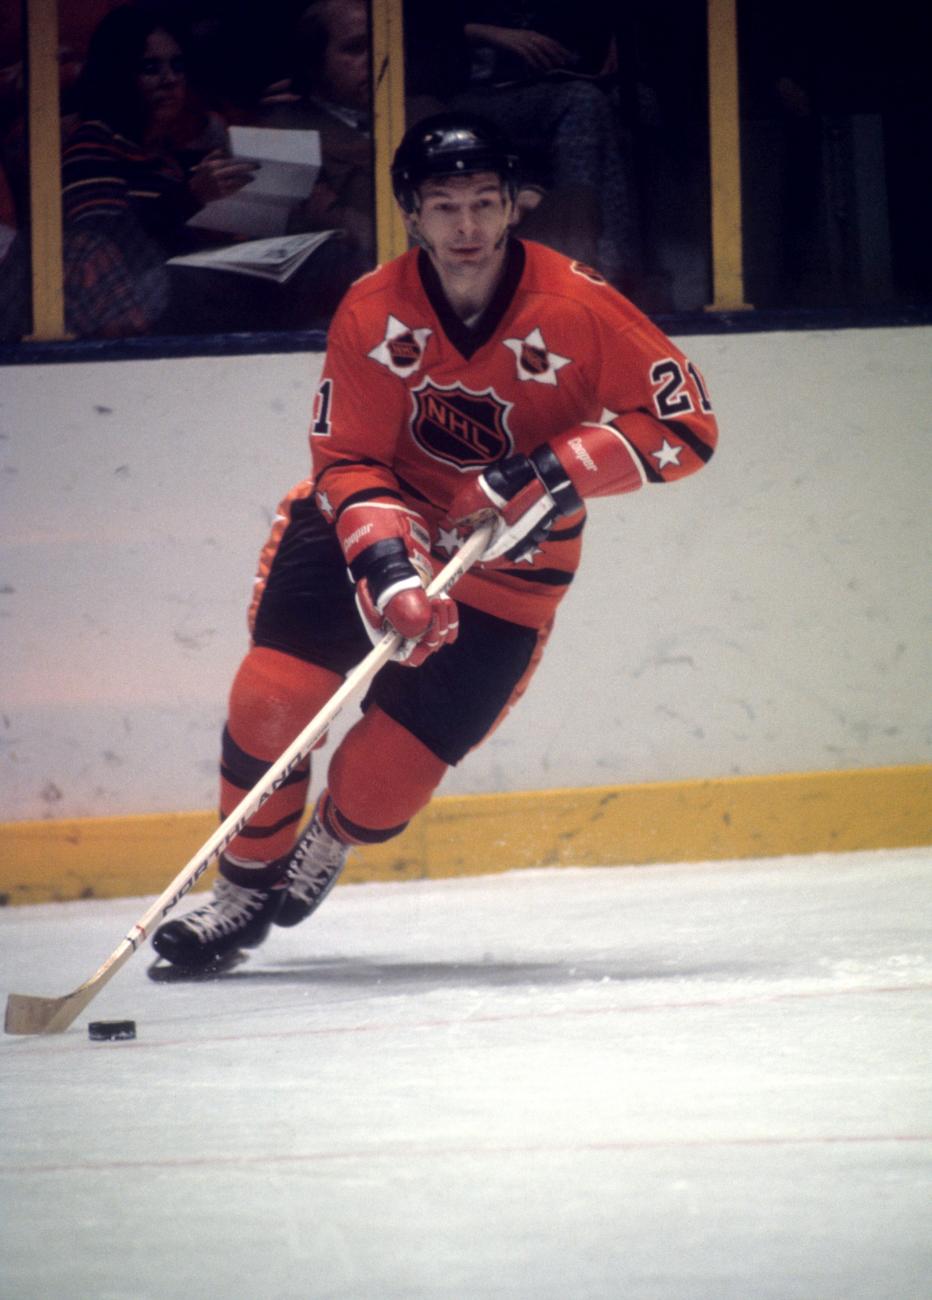 Stan Mikita, en uniforme rouge, patine en tenant un bâton de hockey.